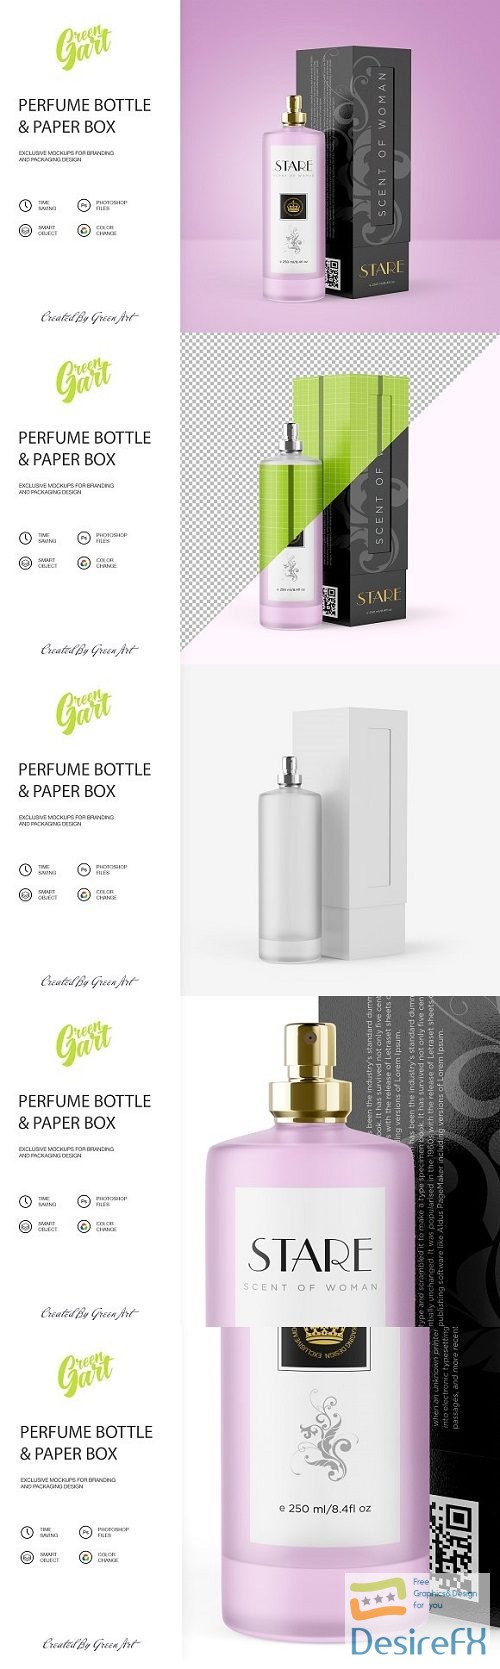 Perfume Bottle & Paper Box Mockup - 2238805